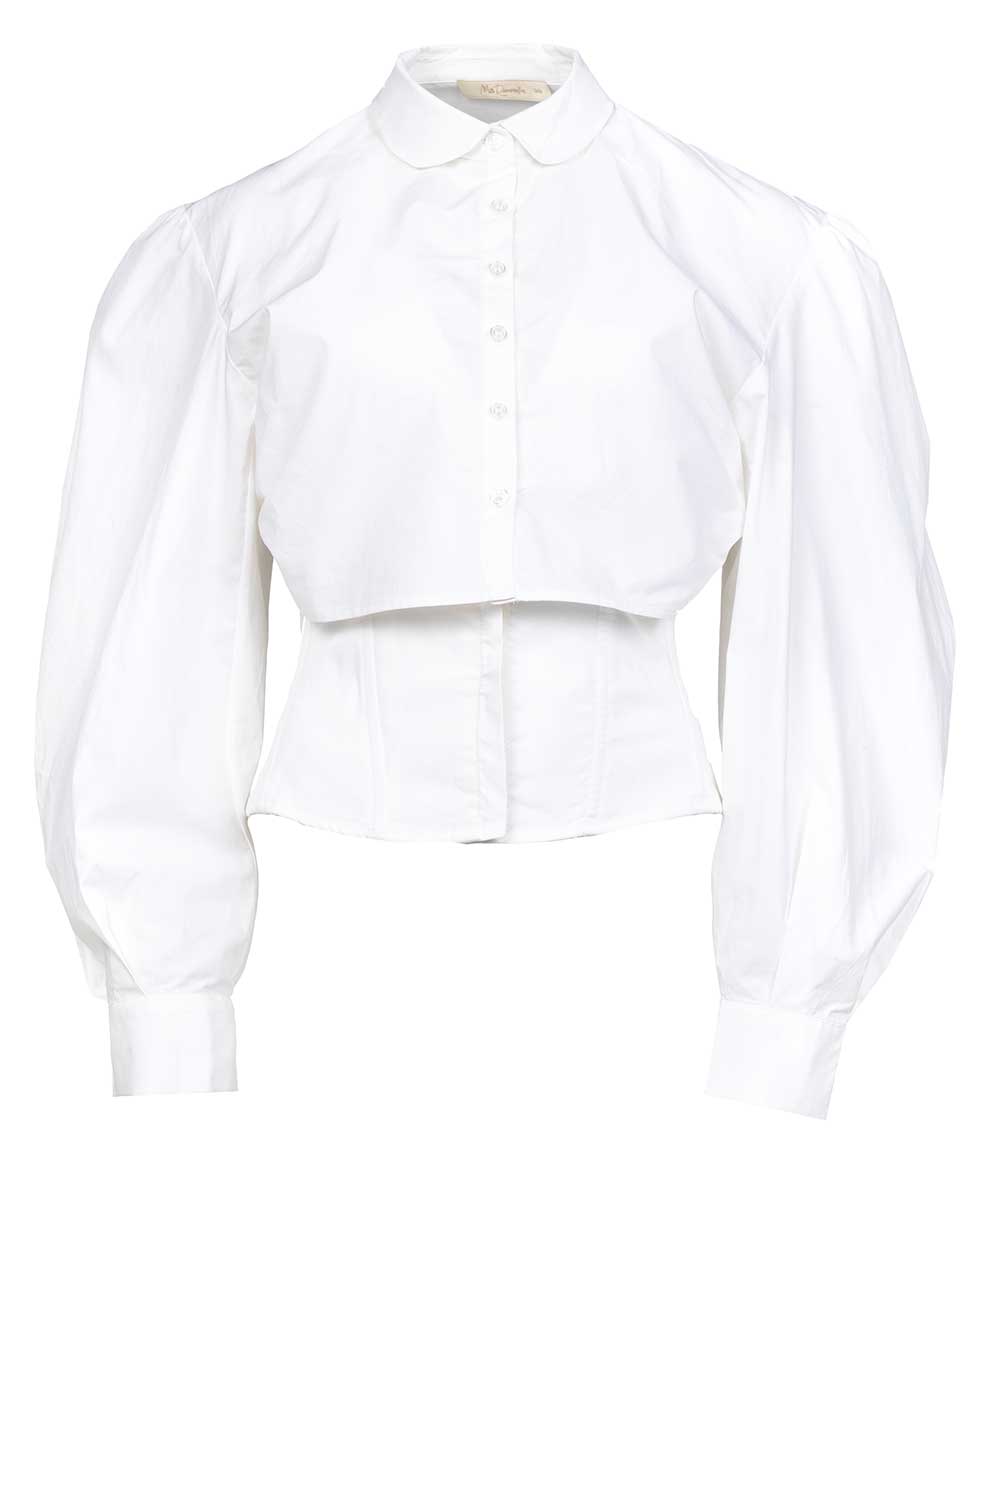 Mes Demoiselles Katoenen blouse met korset detail Victoire wit